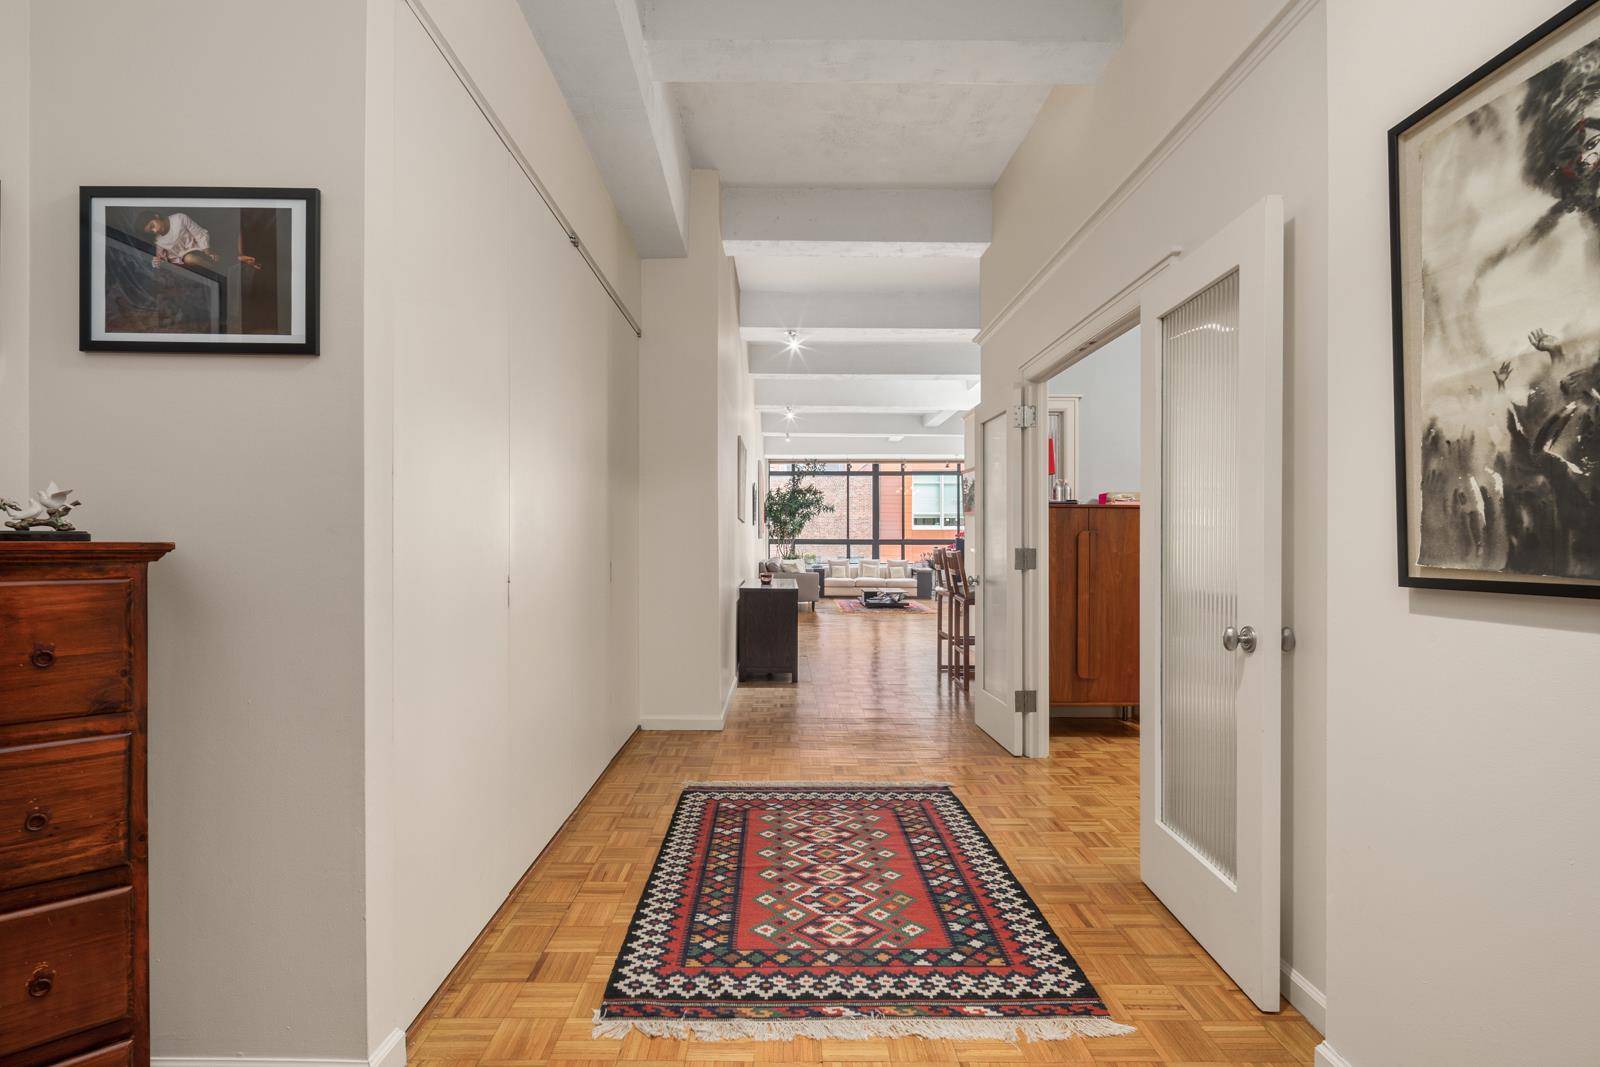 Authentic West Village Loft sensational scale and room proportions !